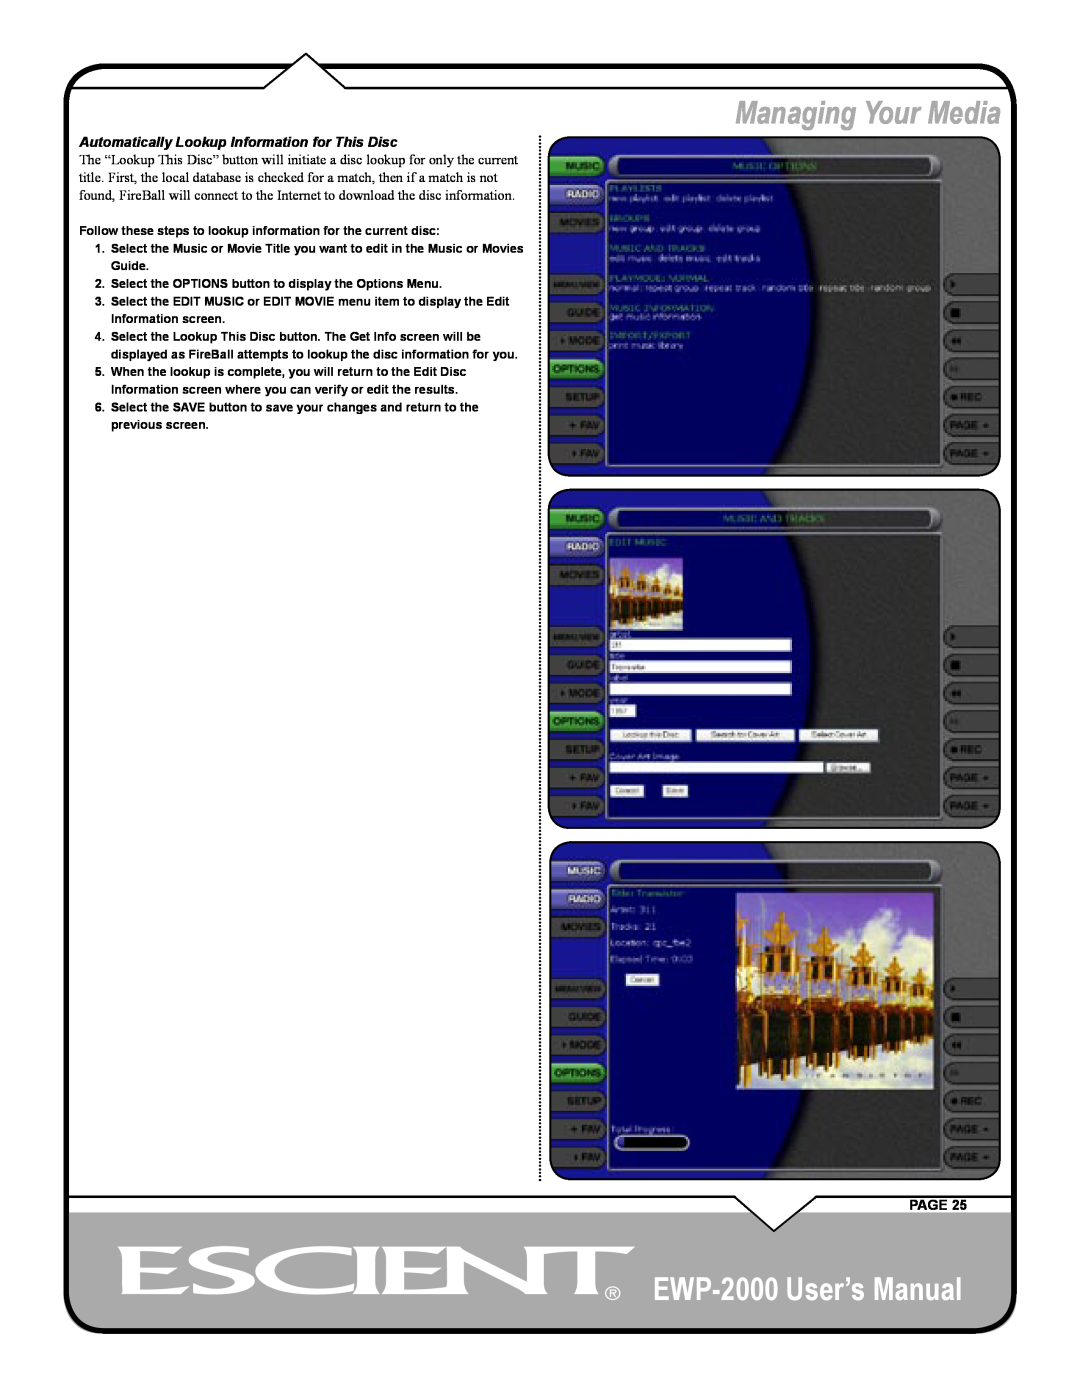 Escient user manual Managing Your Media, EWP-2000 User’s Manual, Page 